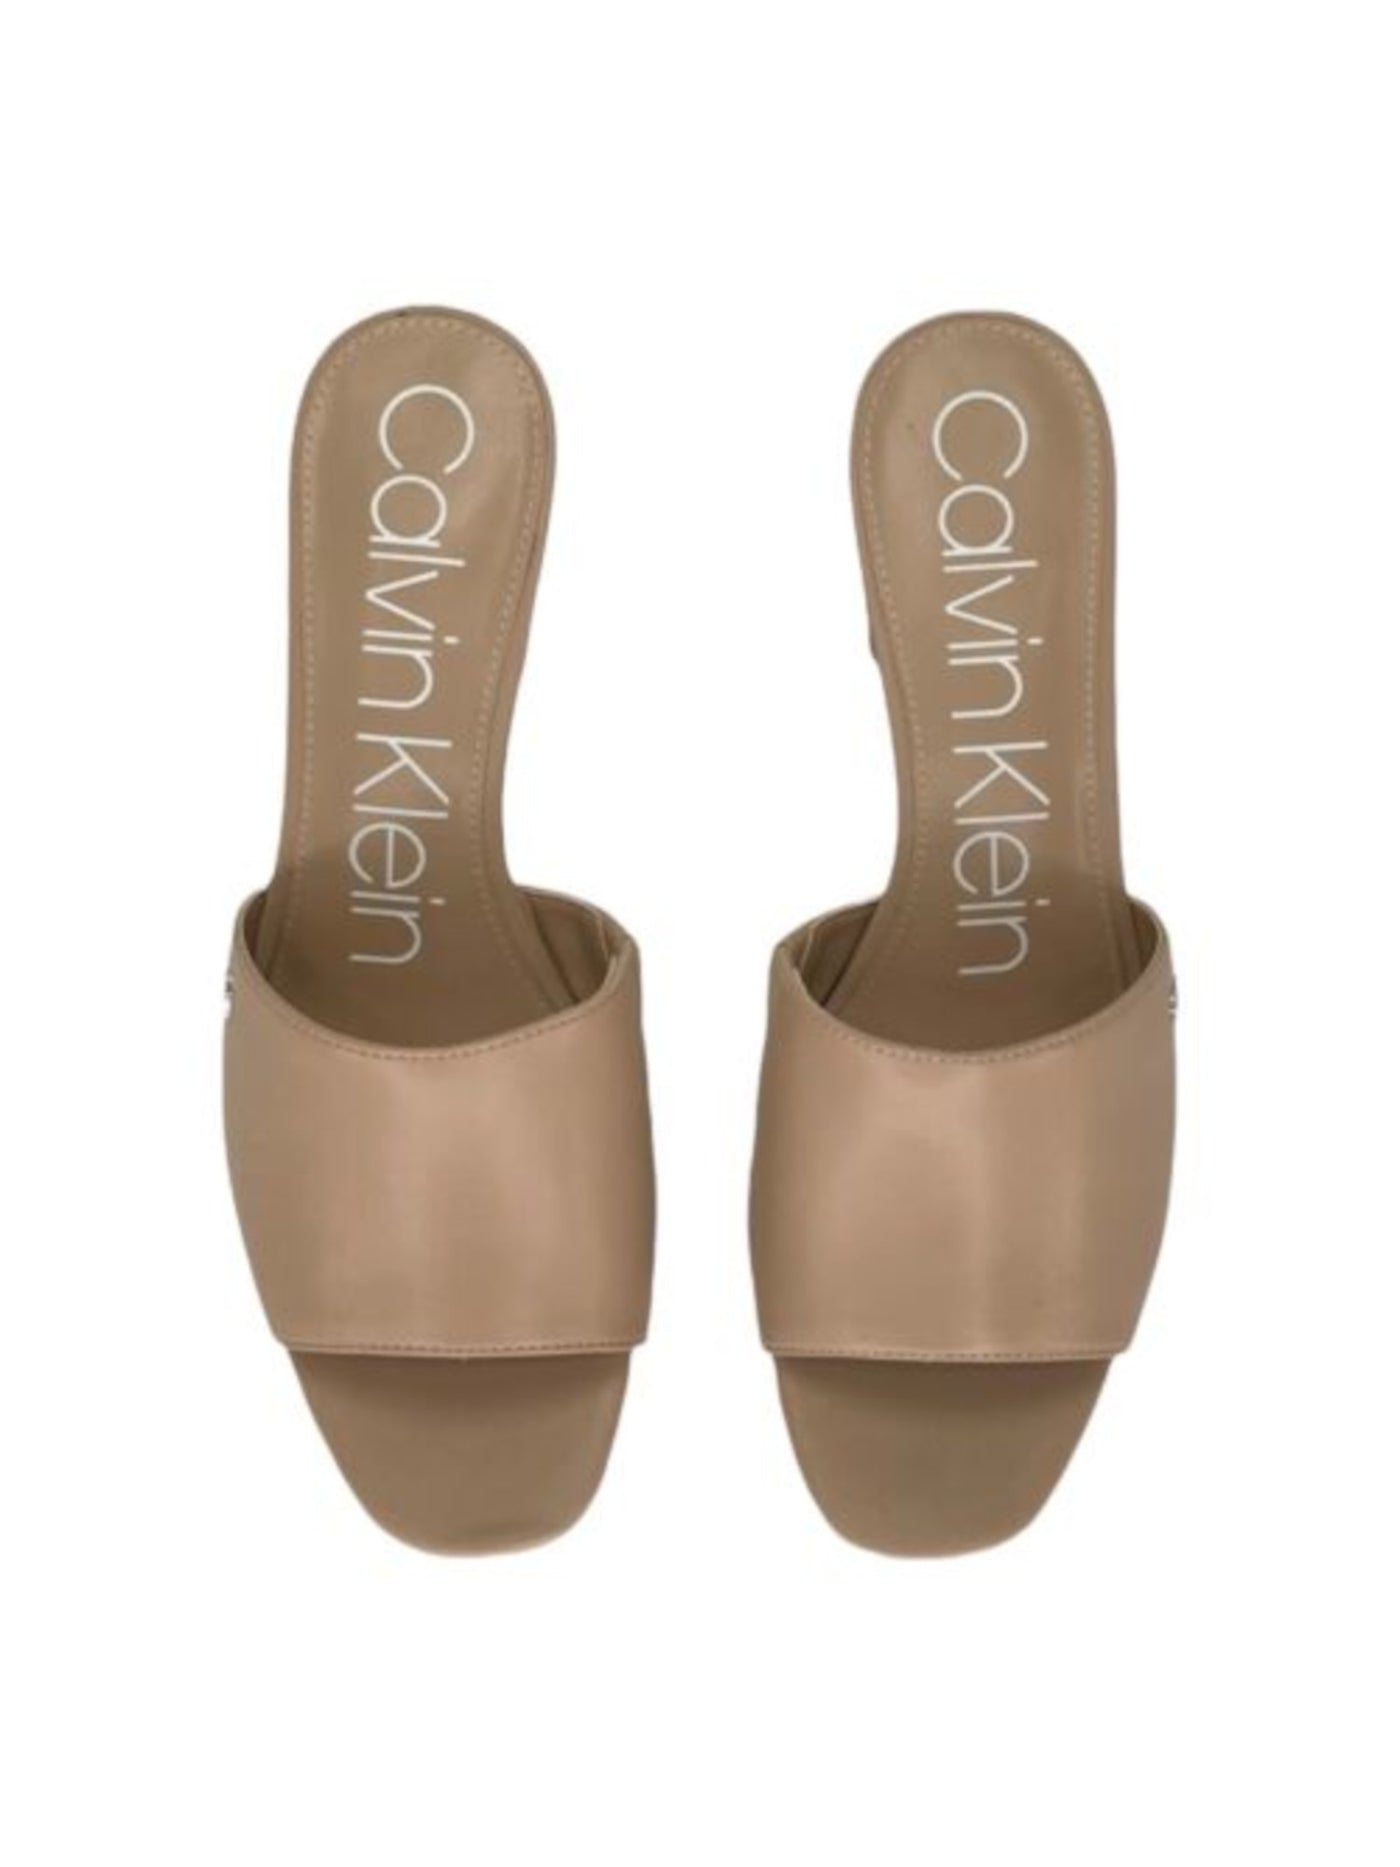 CALVIN KLEIN Womens Beige Goring Logo Cushioned Slip Resistant Carisma Square Toe Block Heel Slip On Dress Sandals Shoes 8.5